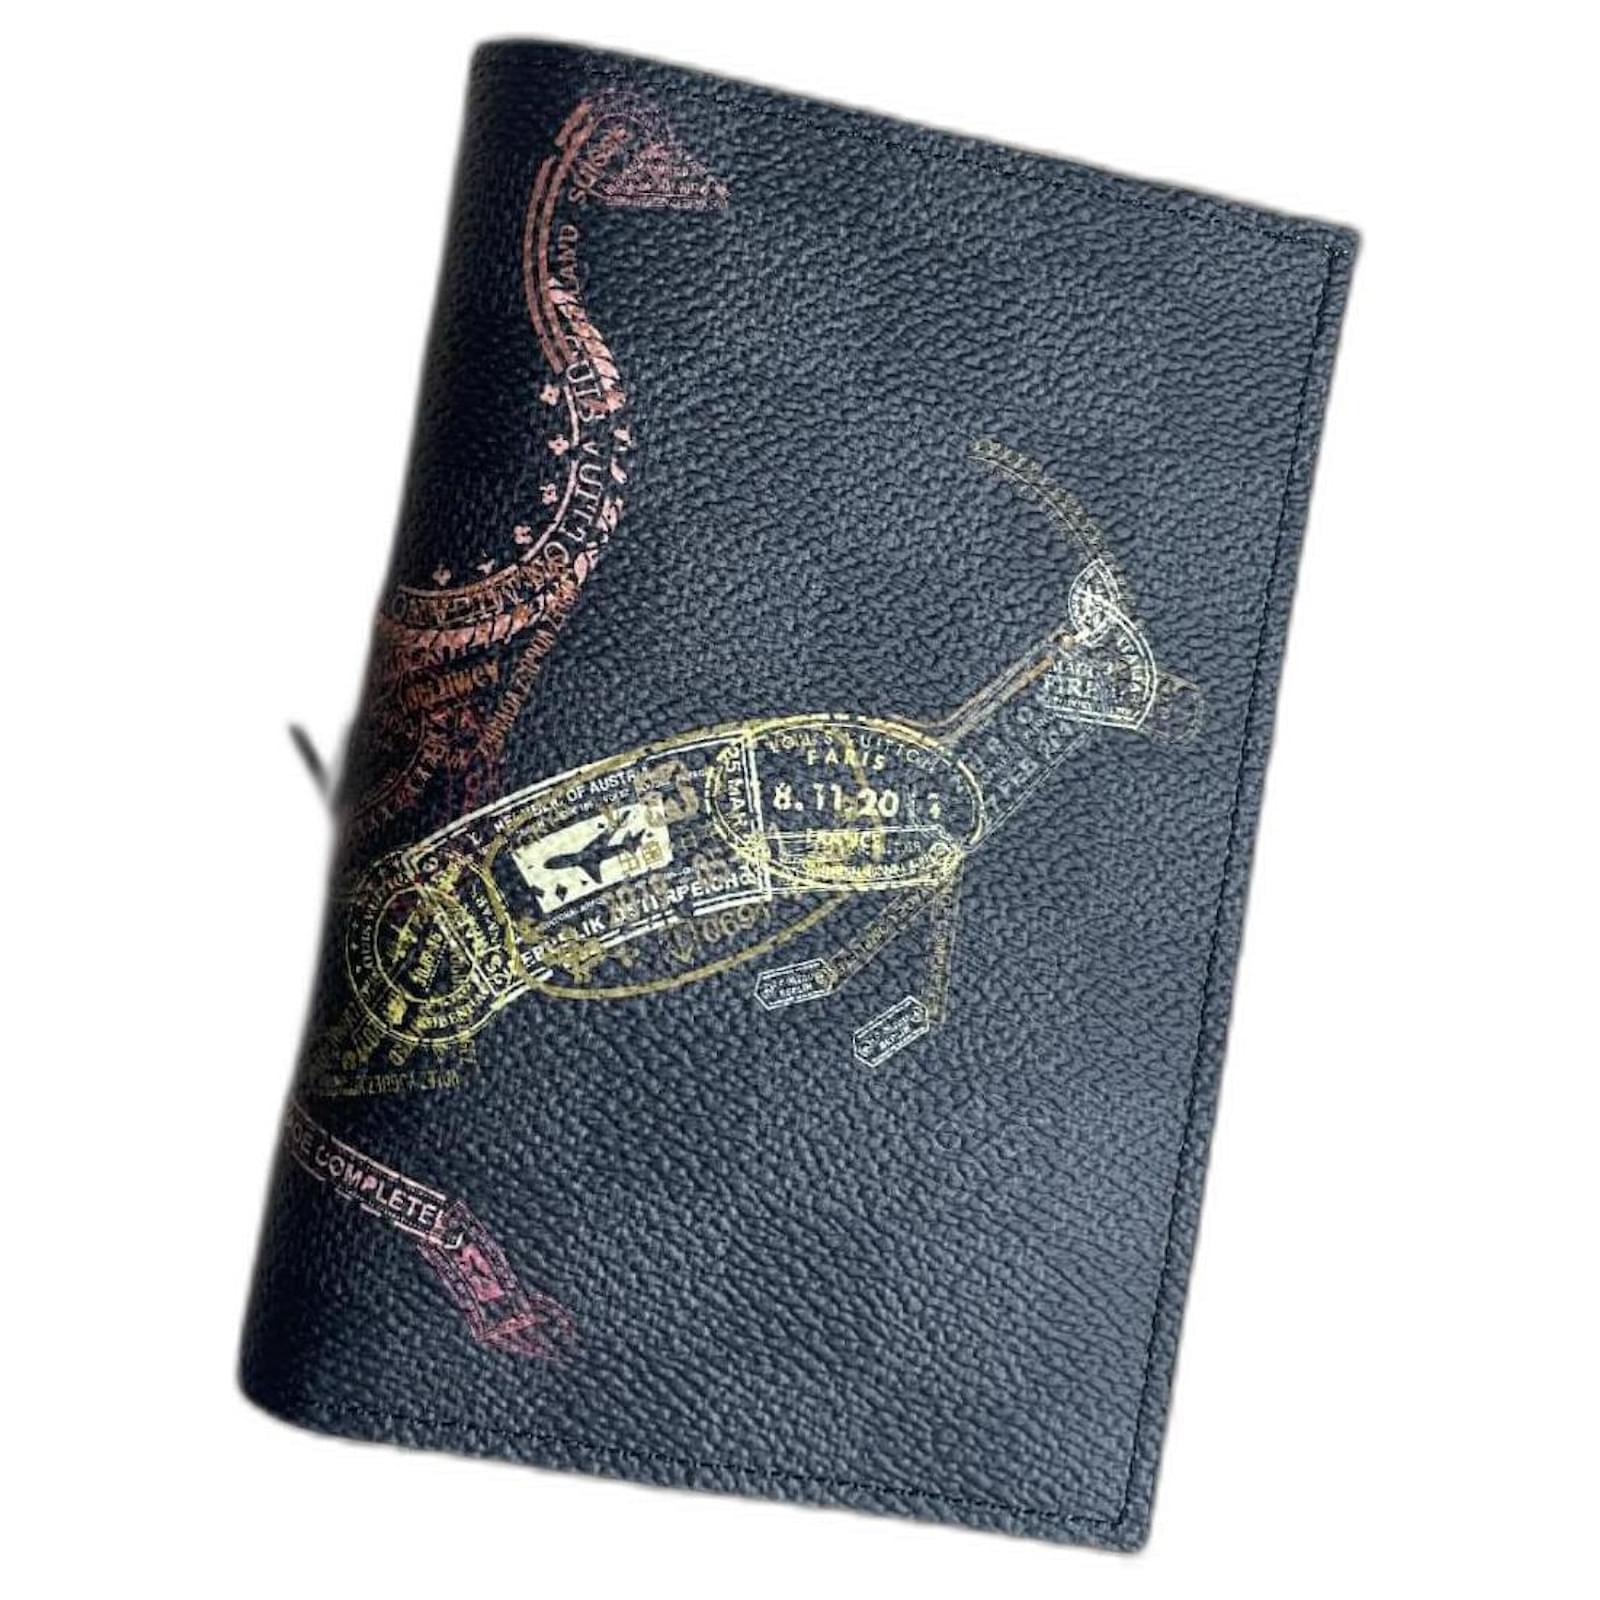 Designer Passport Cover in Damier Graphite Canvas